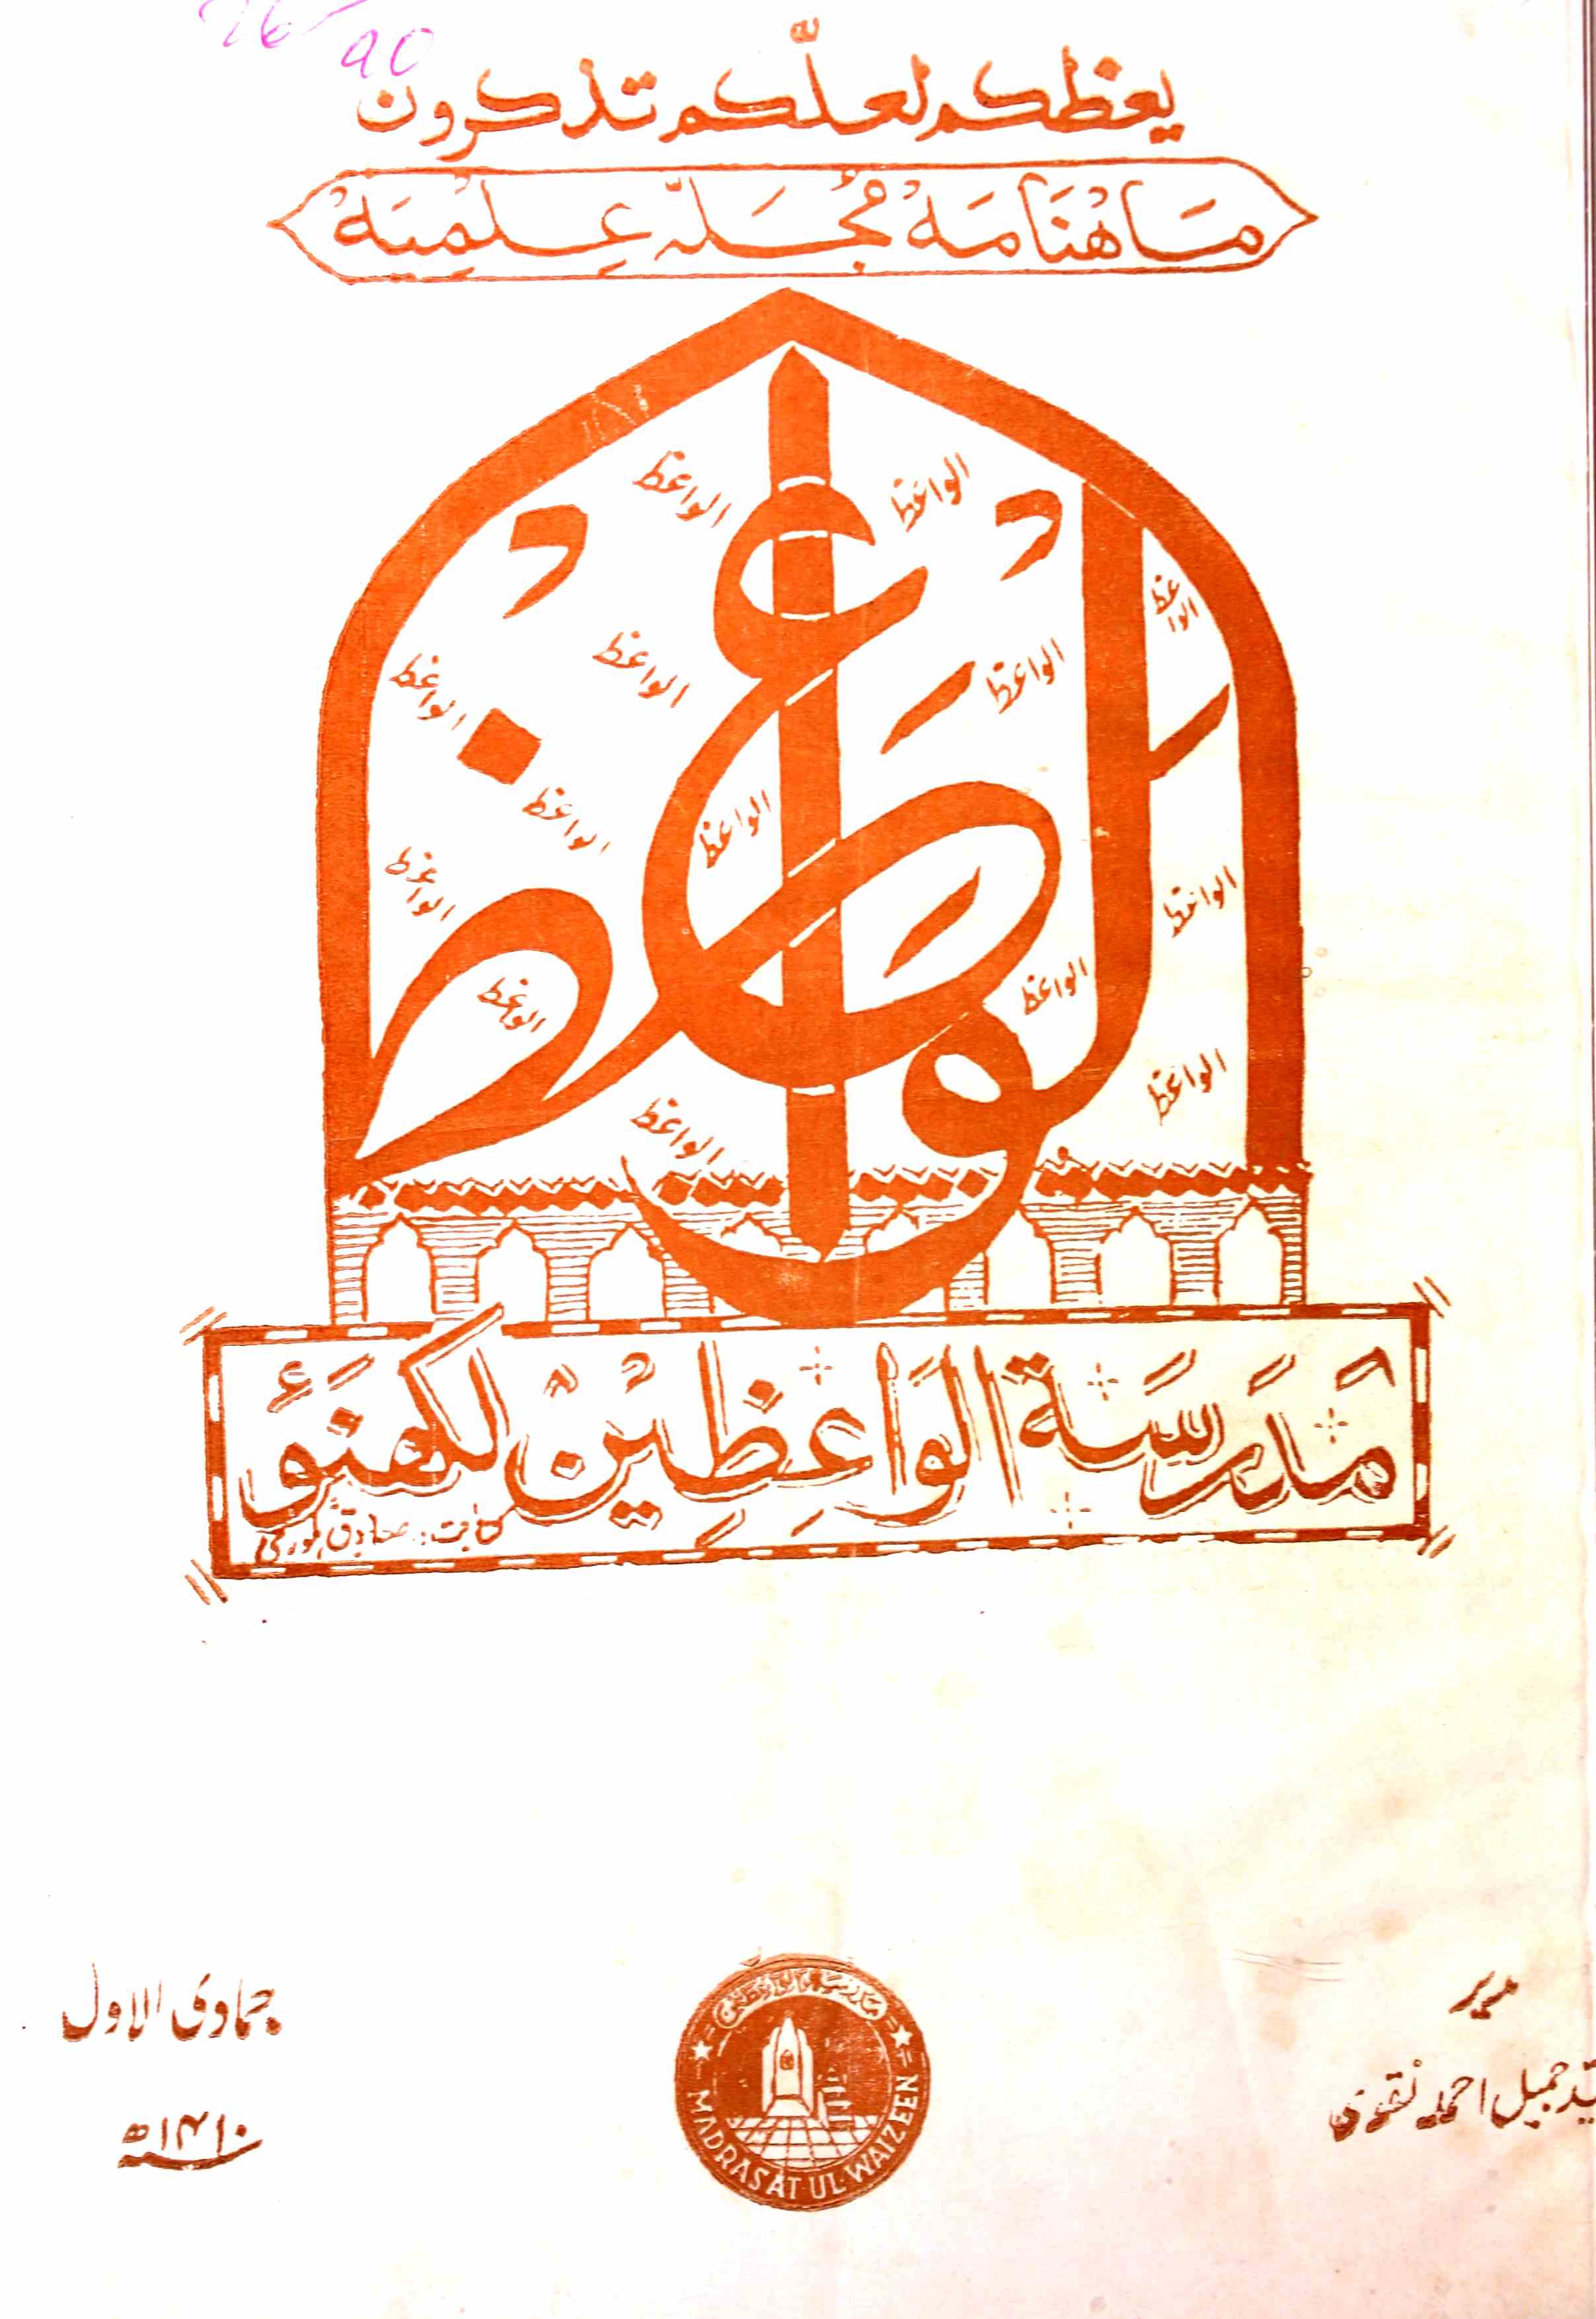 Al-Waiz